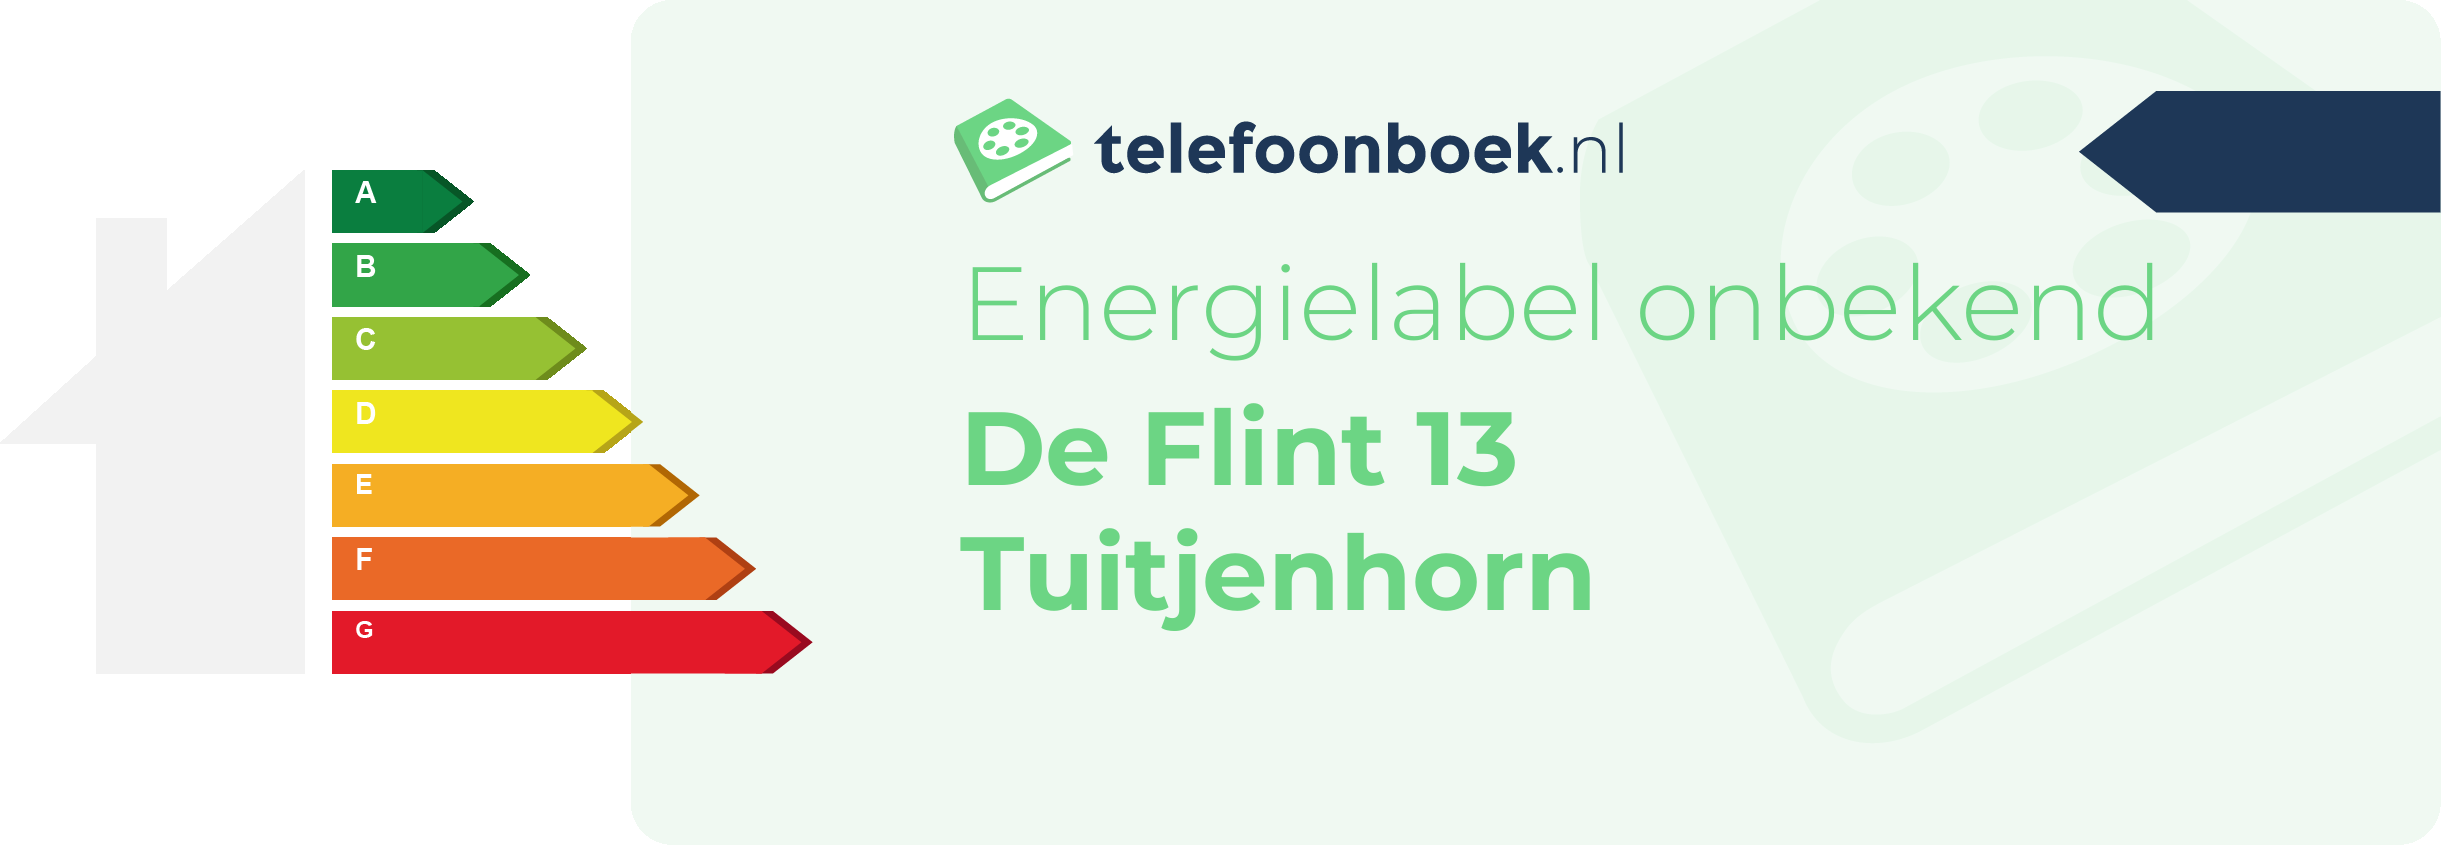 Energielabel De Flint 13 Tuitjenhorn